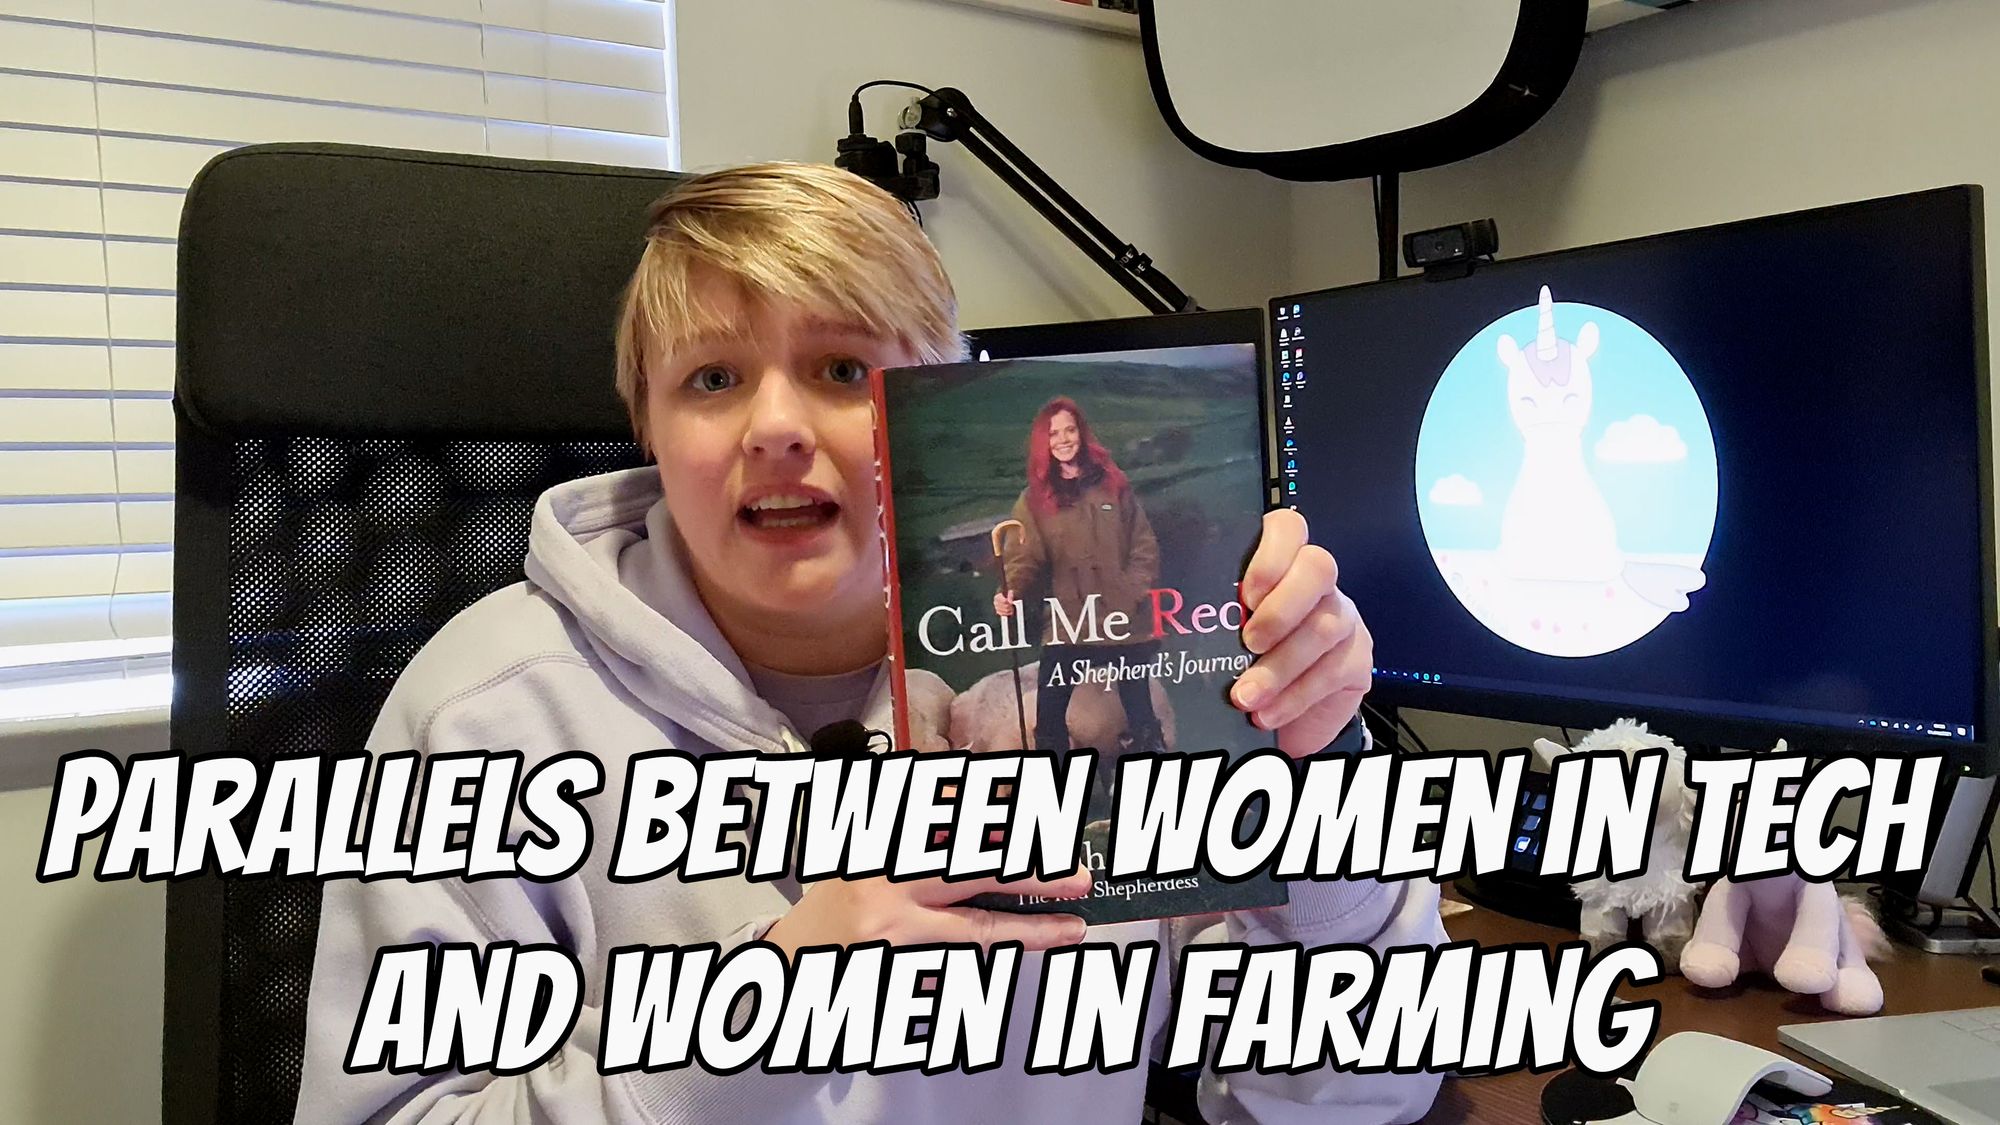 Weekly Update #85 - Parallels between women in tech and women in farming